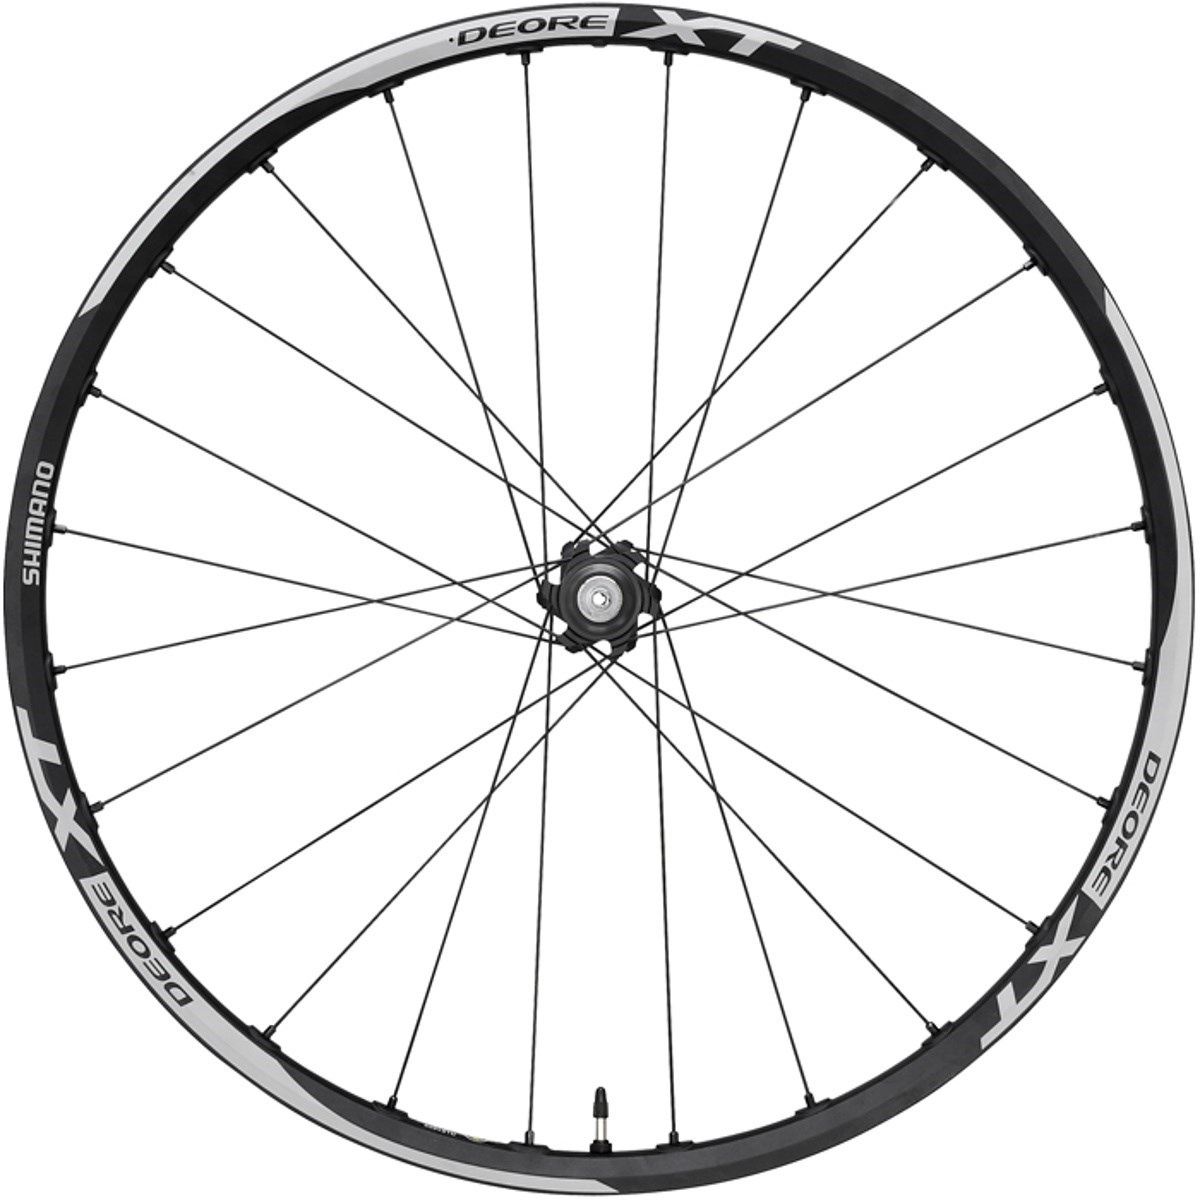 Shimano WH-M785 XT 29er Q/R Front MTB Wheel product image